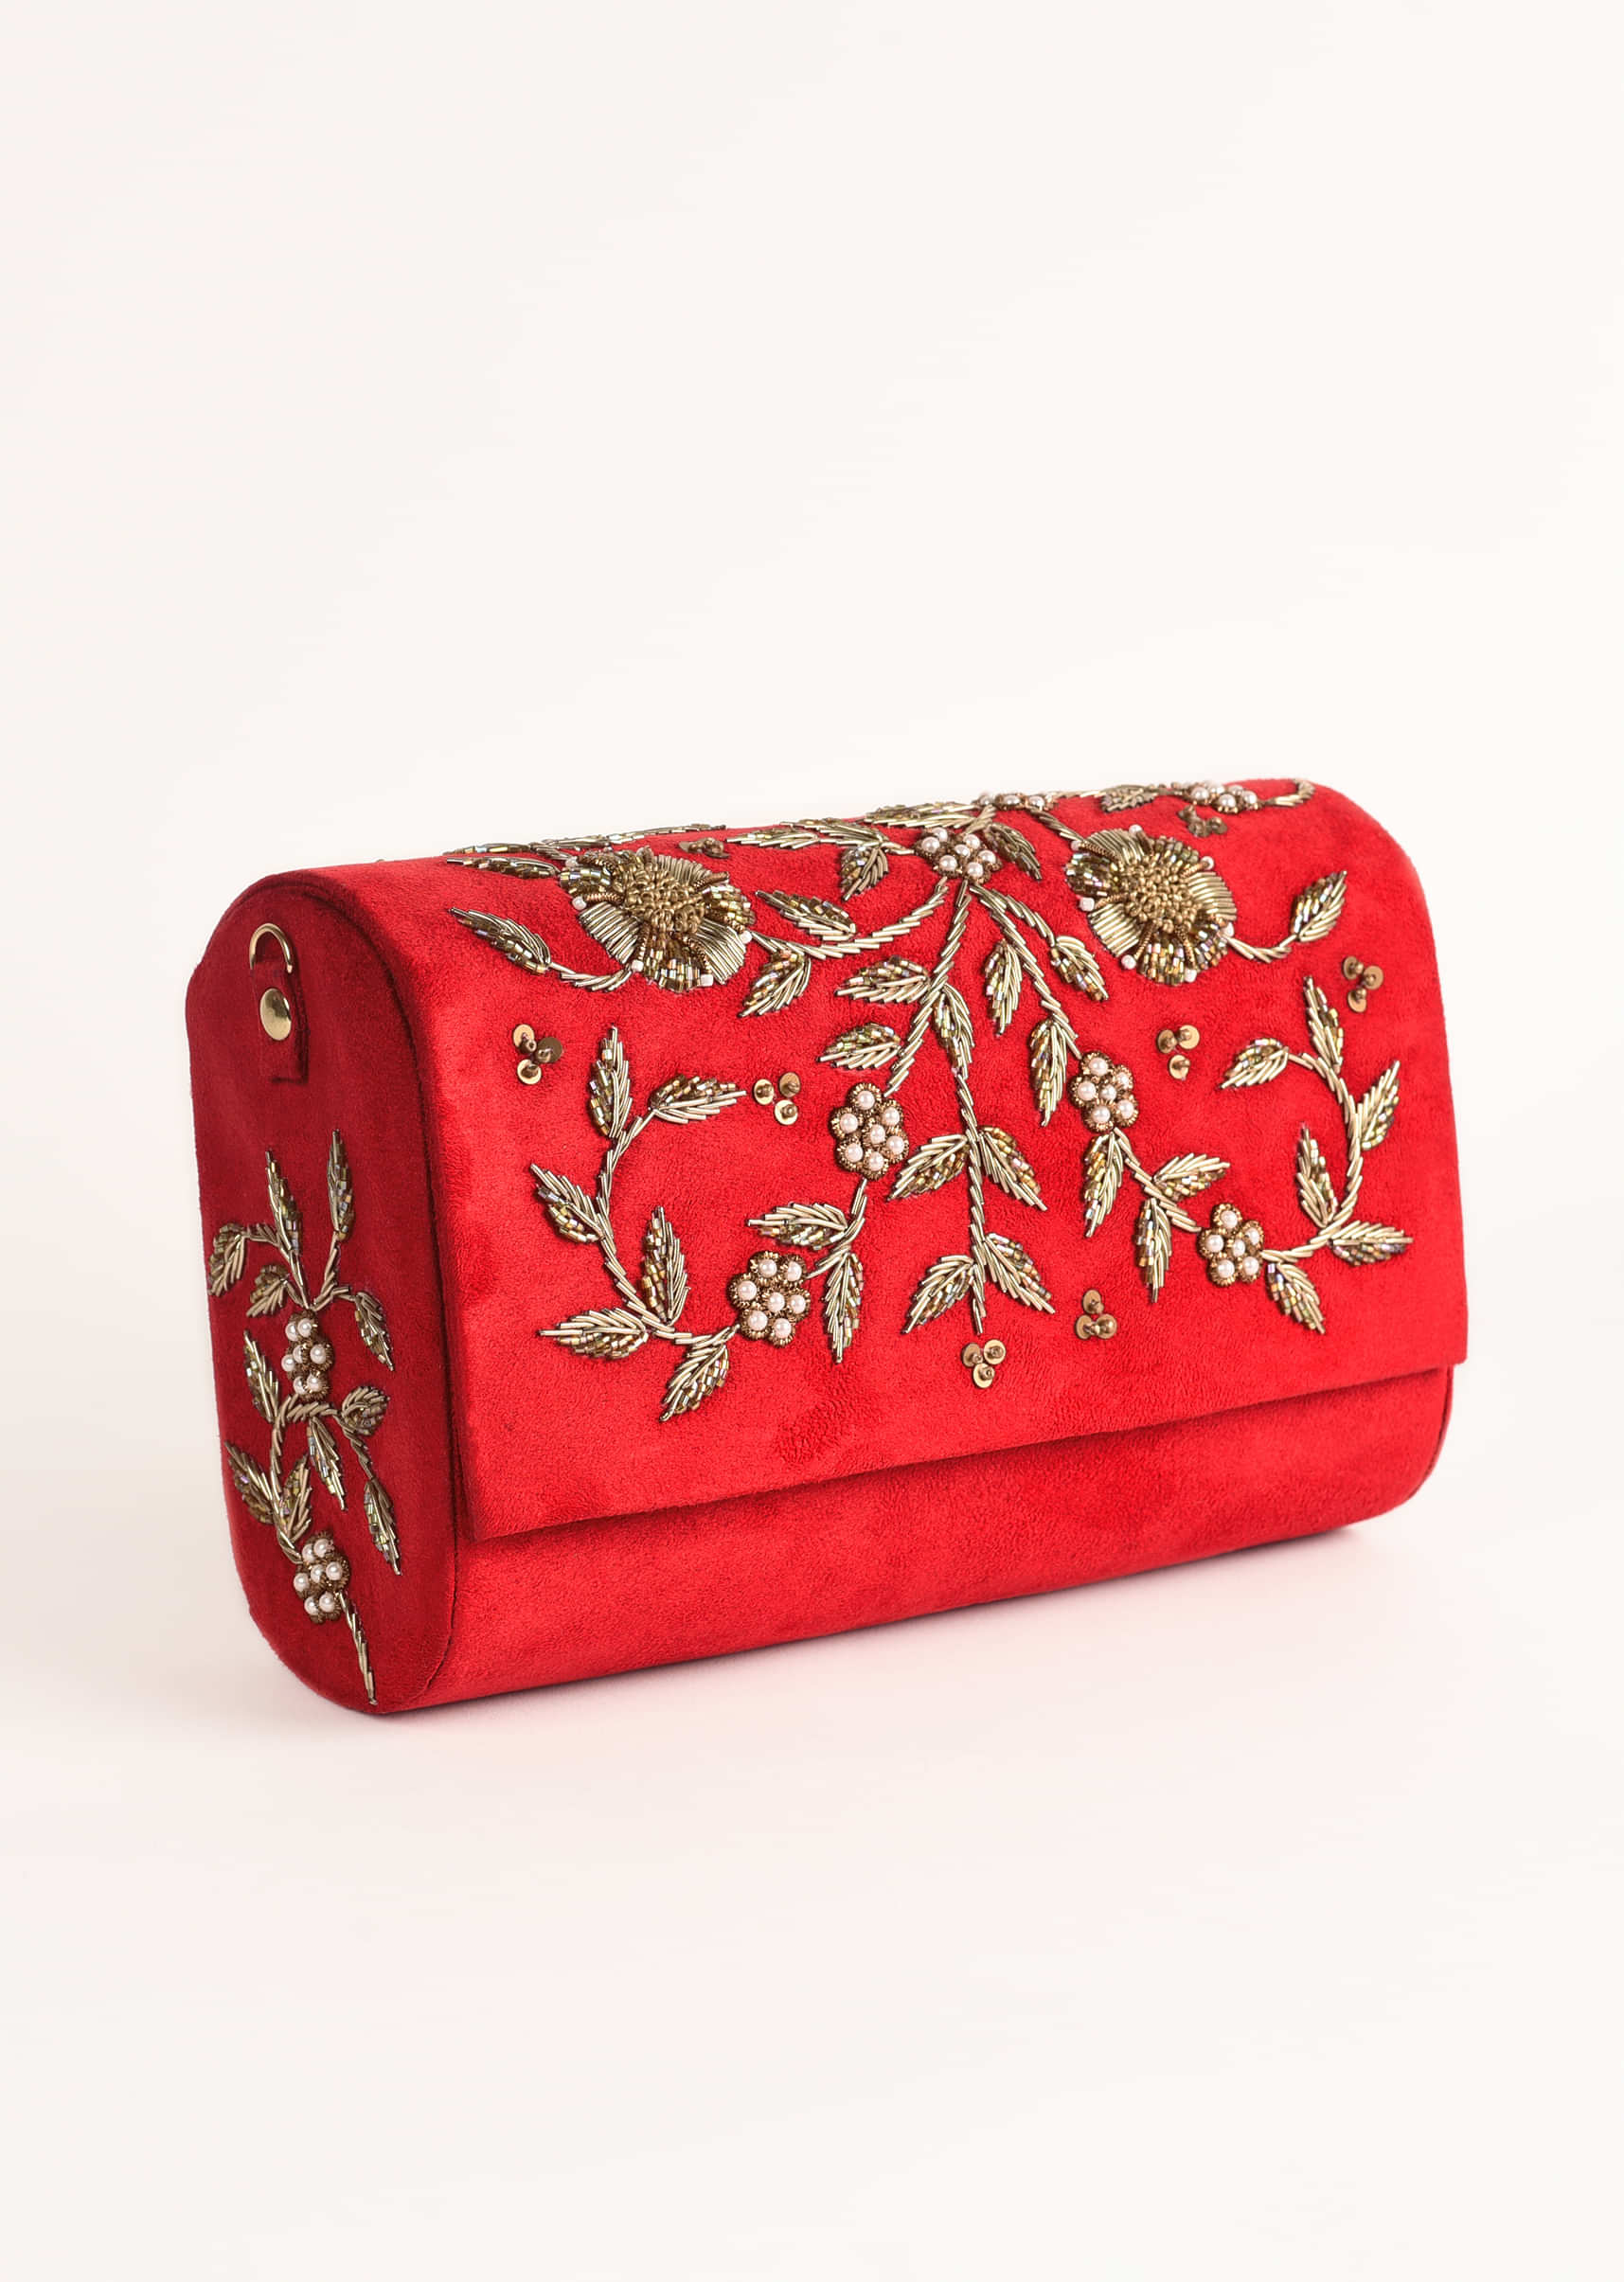 Red Clutch In Suede With Zardosi Embroidered Floral Motifs Online - Kalki Fashion